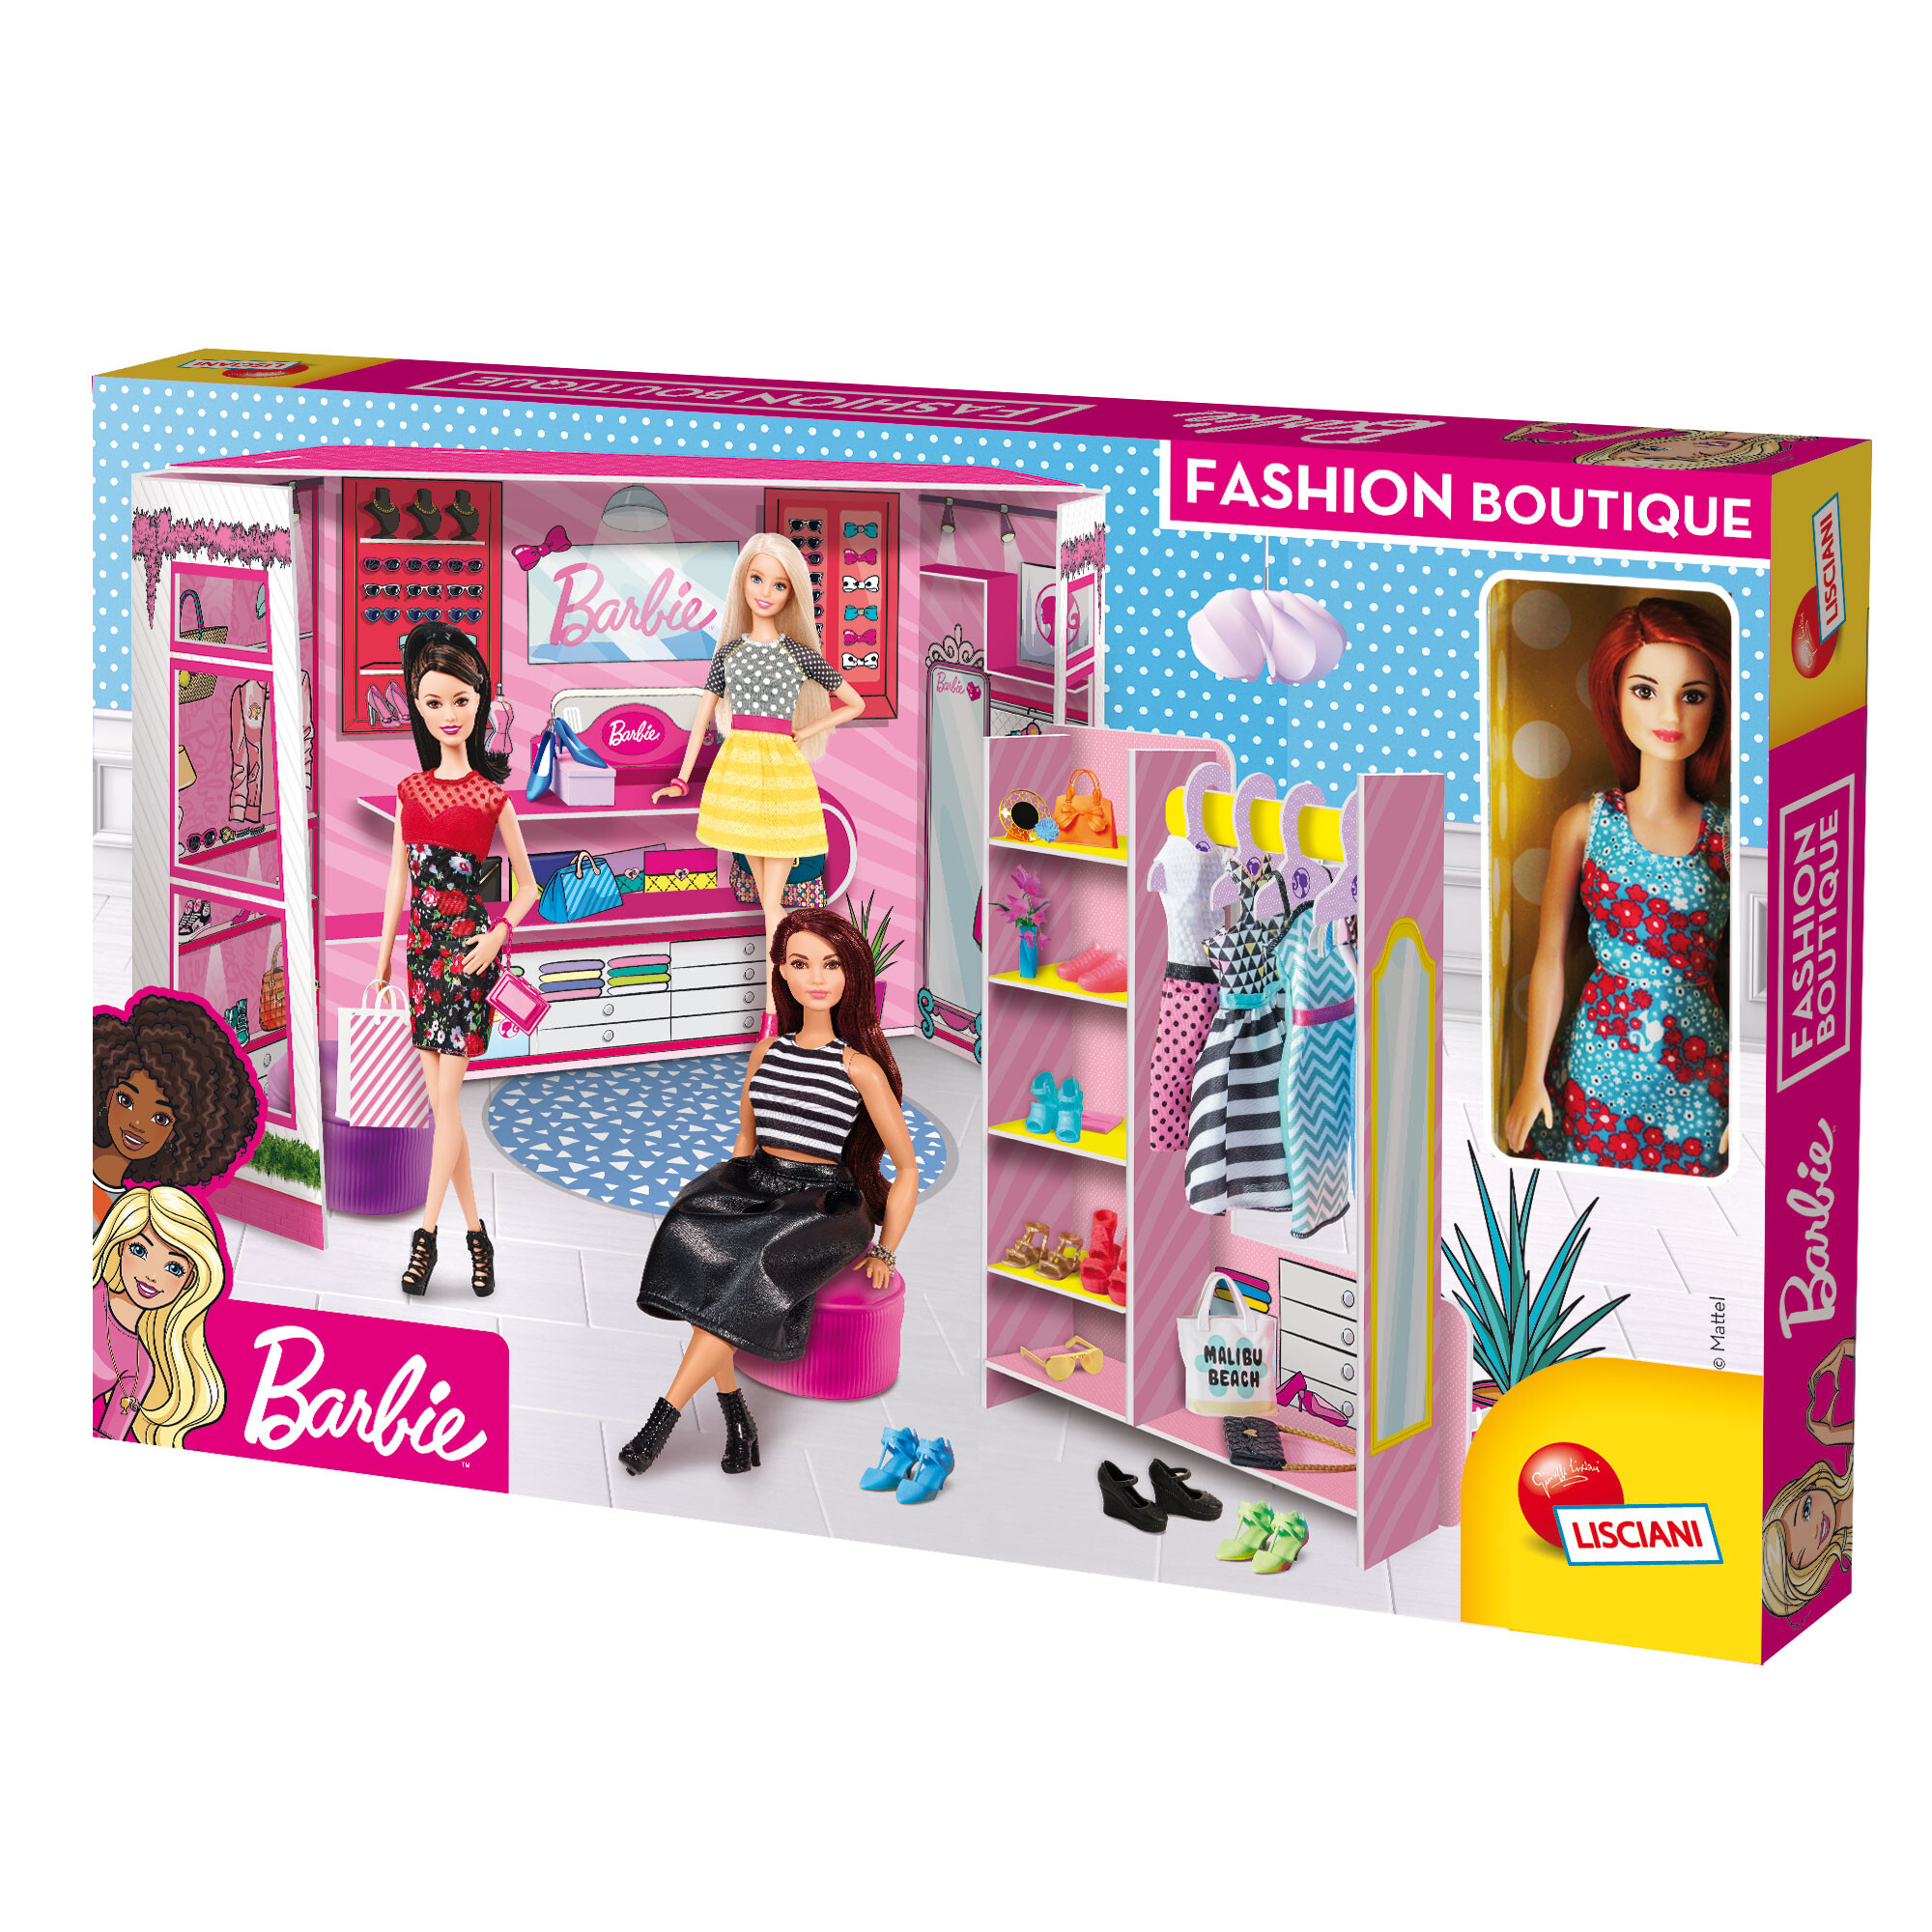 Barbie fashion boutique - LISCIANI